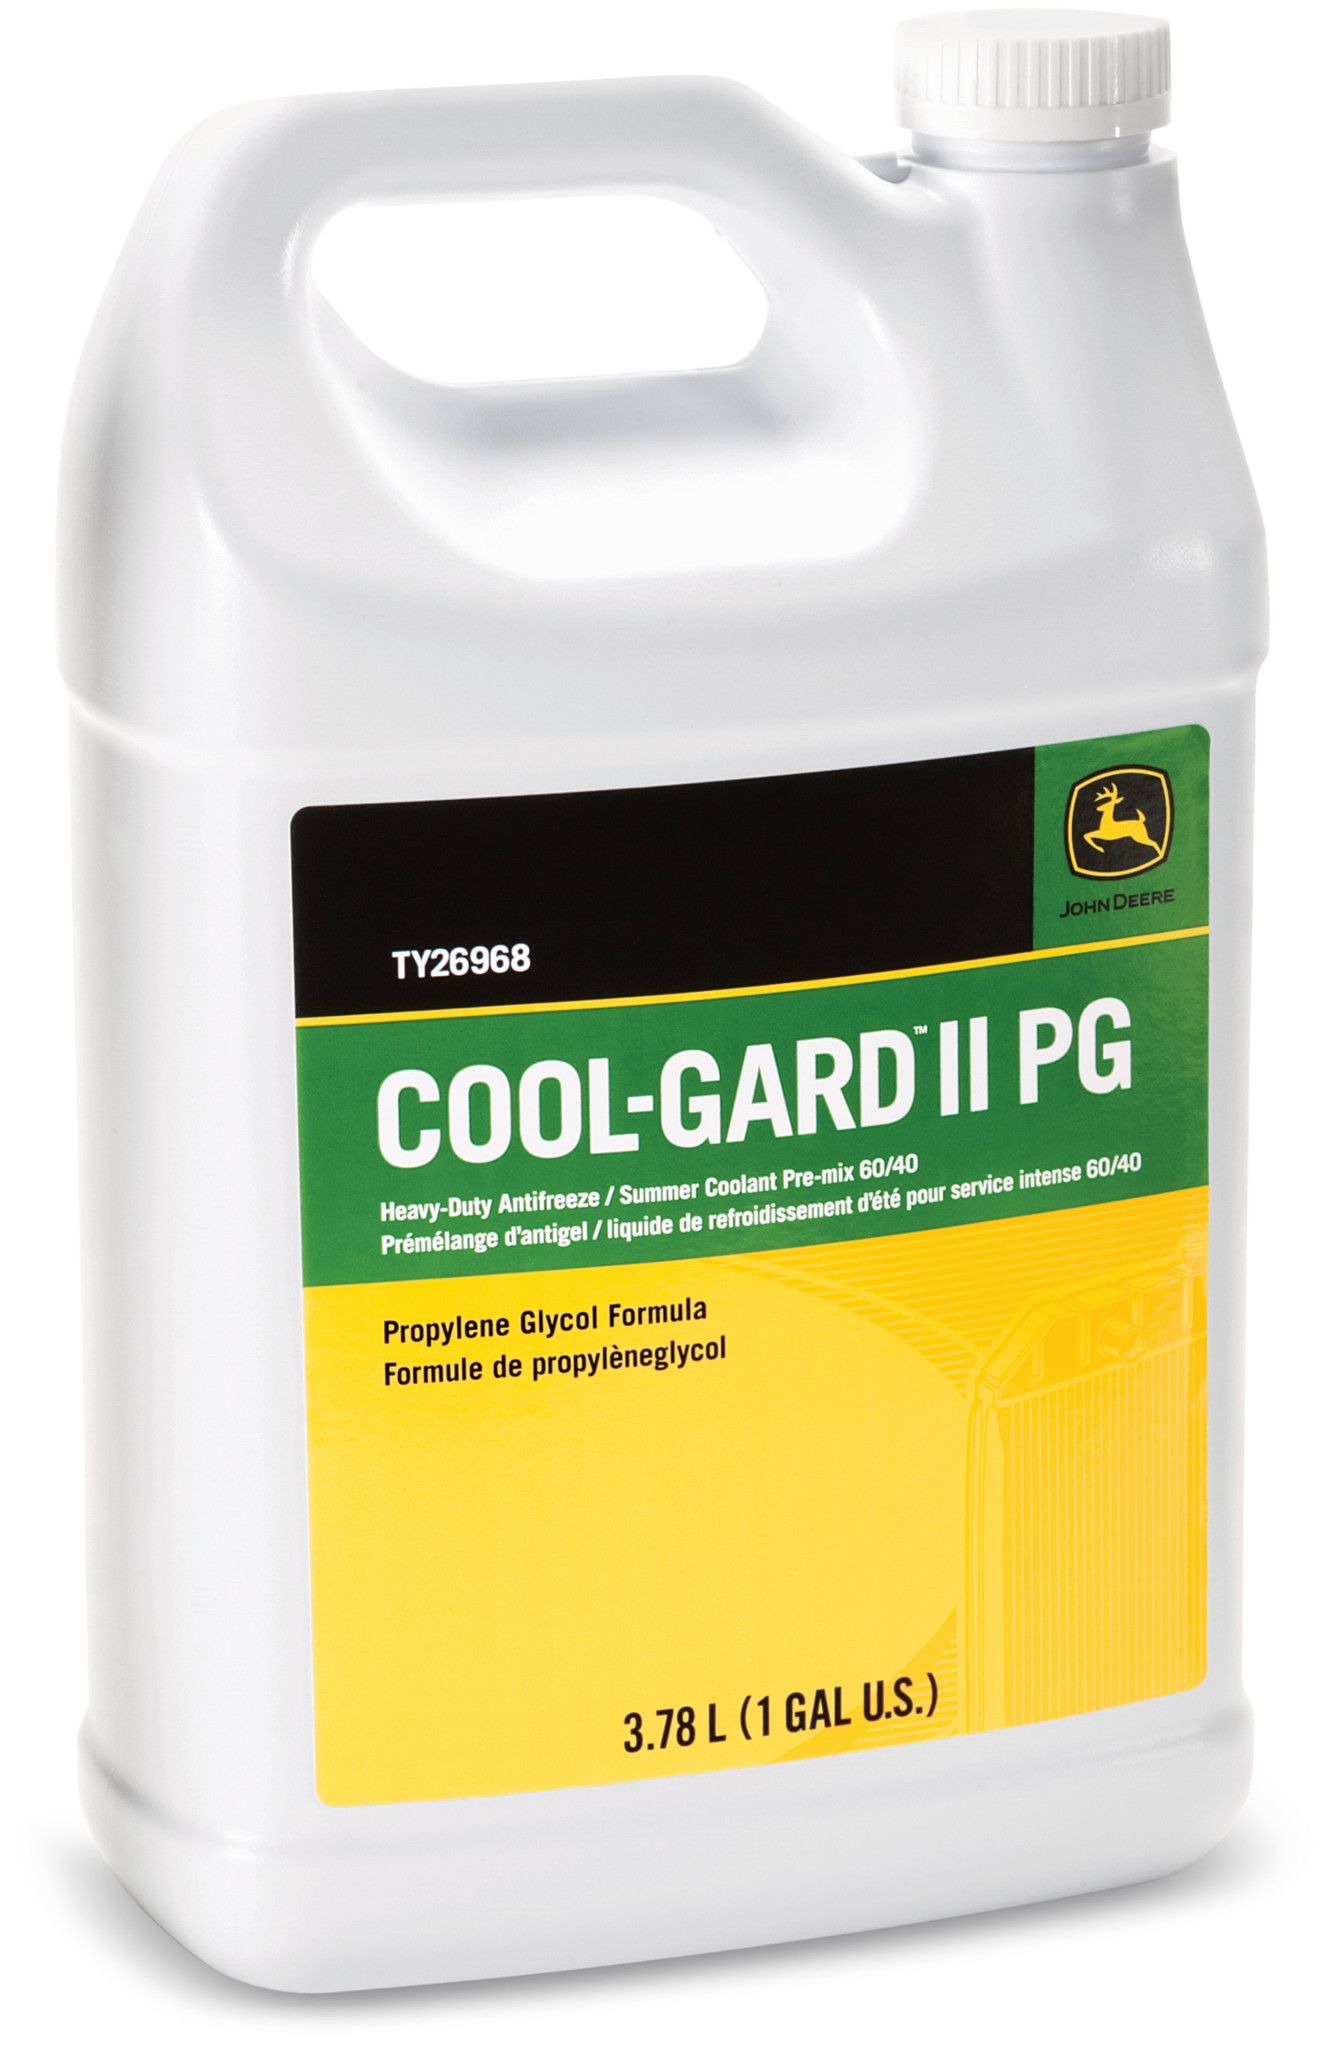 Cool-Gard II PG Heavy-Duty Antifreeze/Summer Coolant Pre-Mix - TY26968